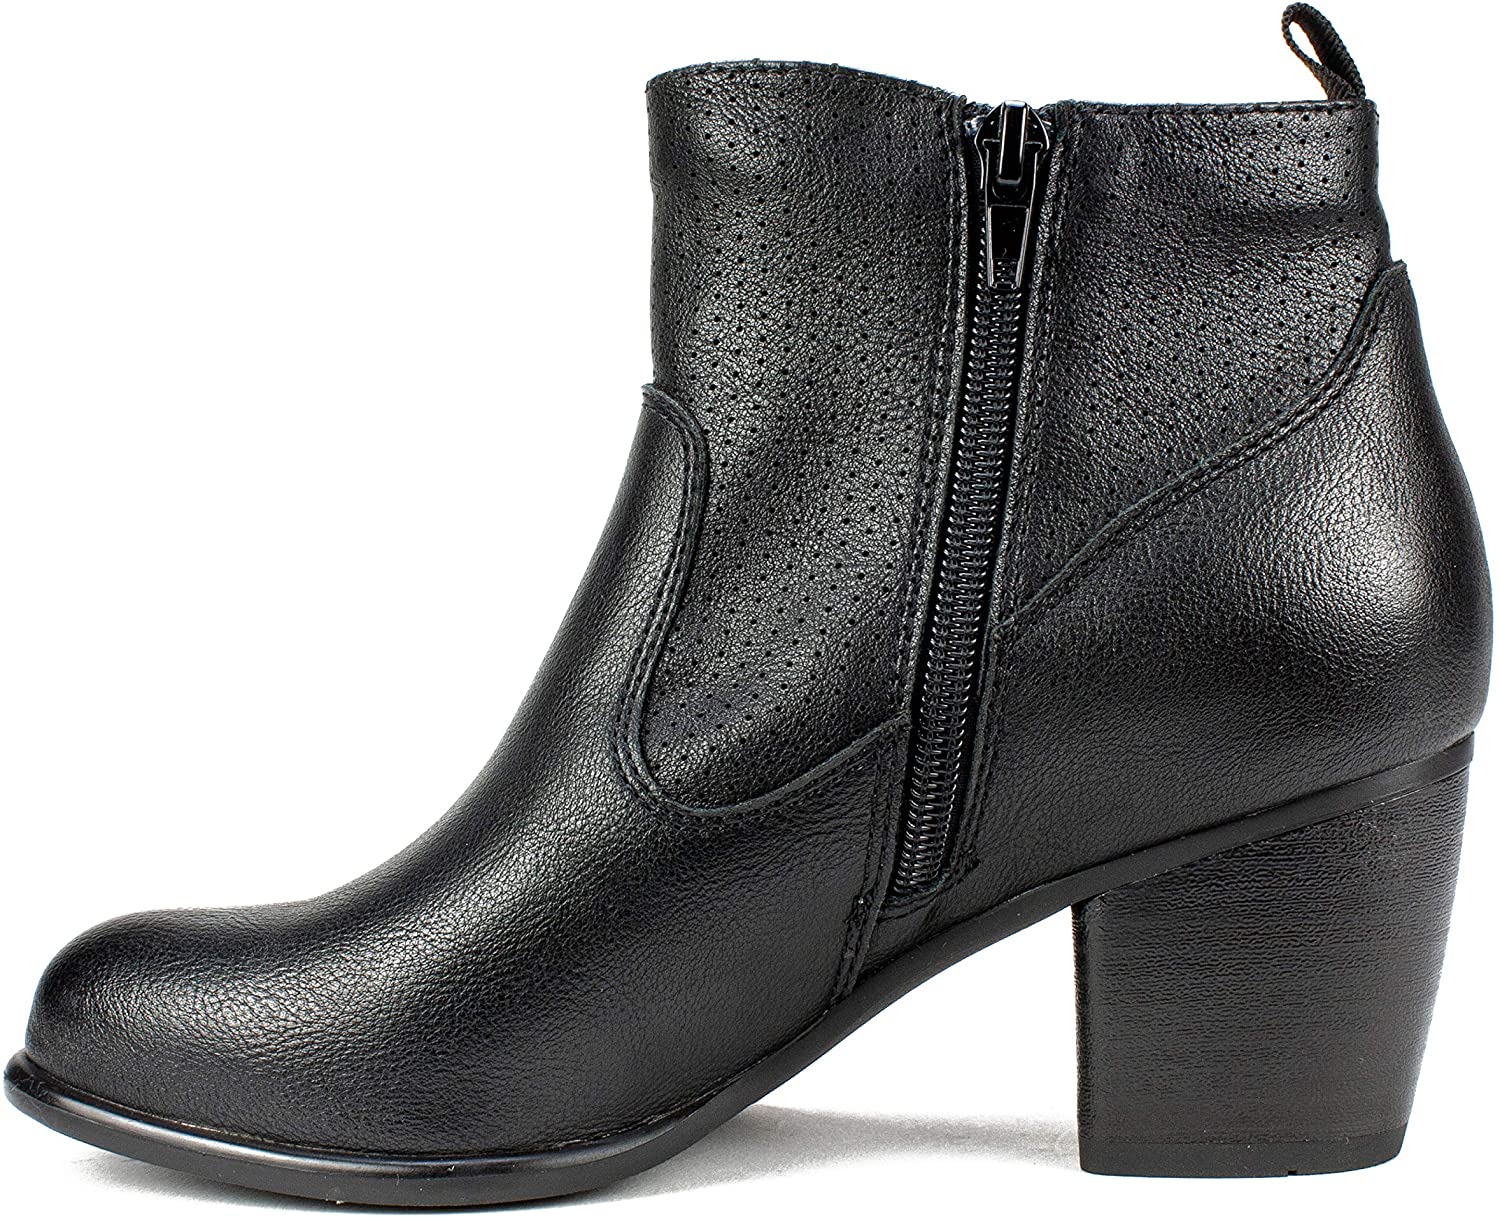 WHITE MOUNTAIN Shoes Grace Women's Boot, Black, Size 8.0 c8vY | eBay